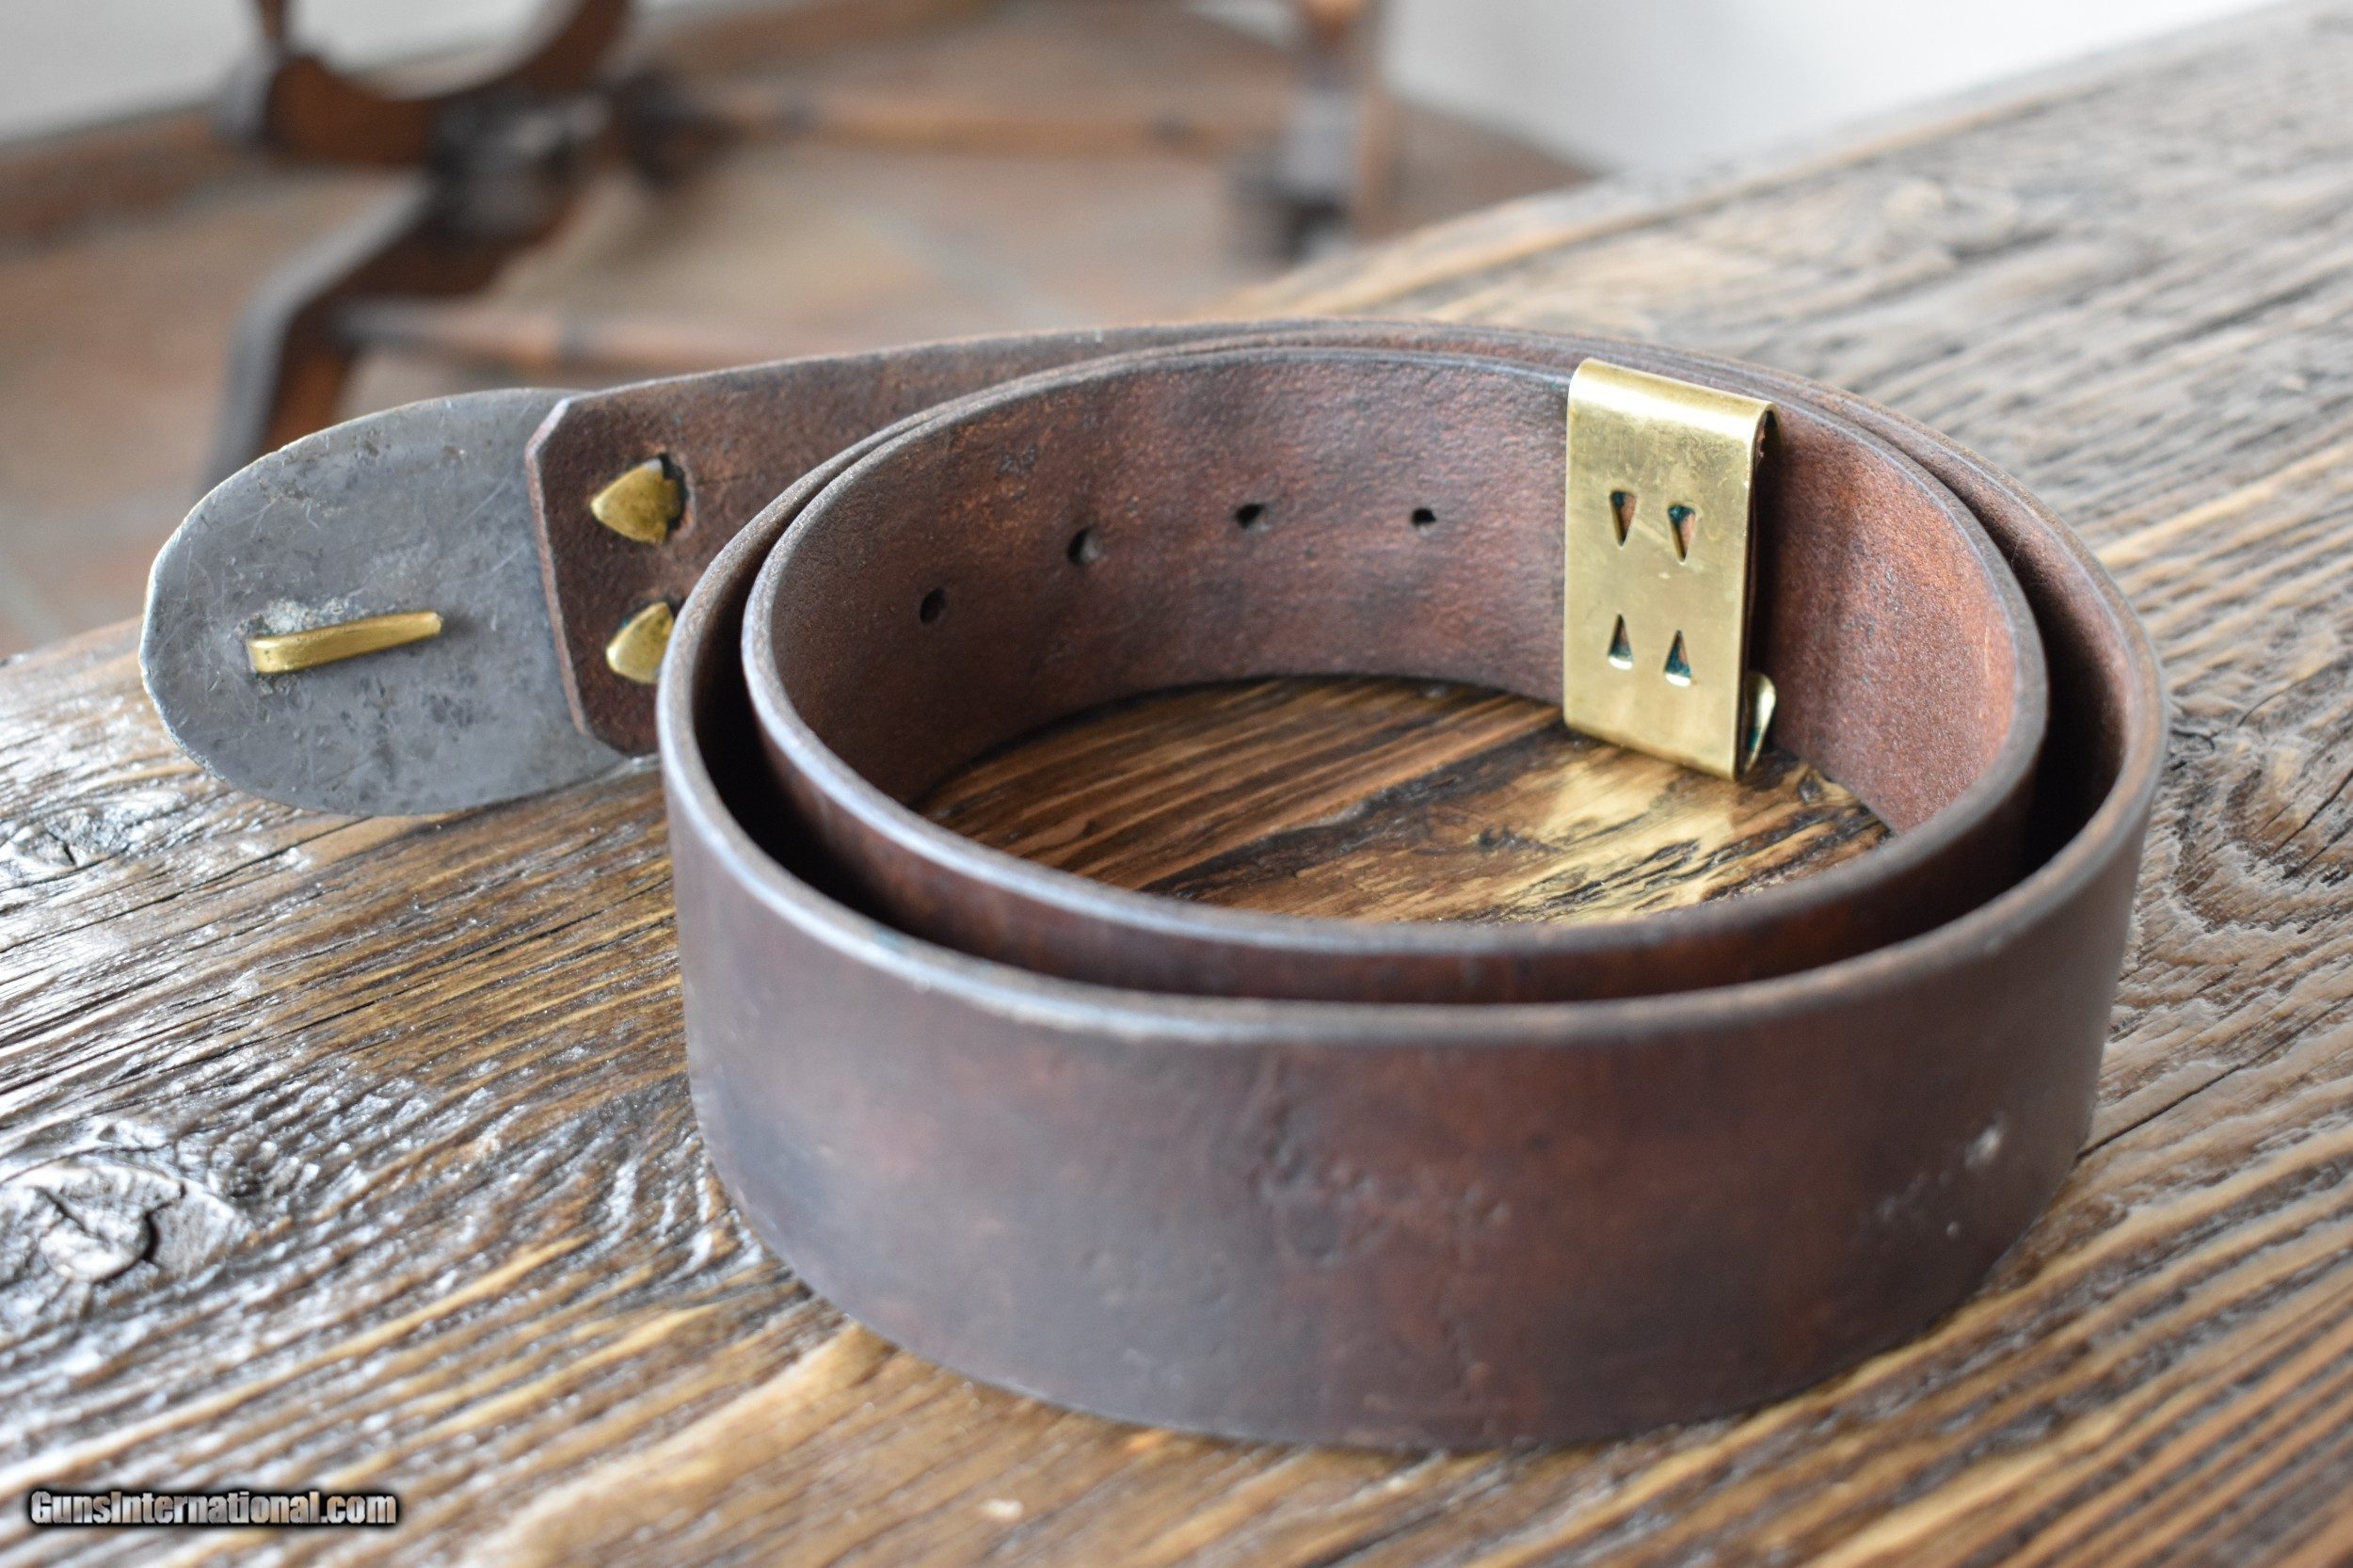 Civil war belt with buckle